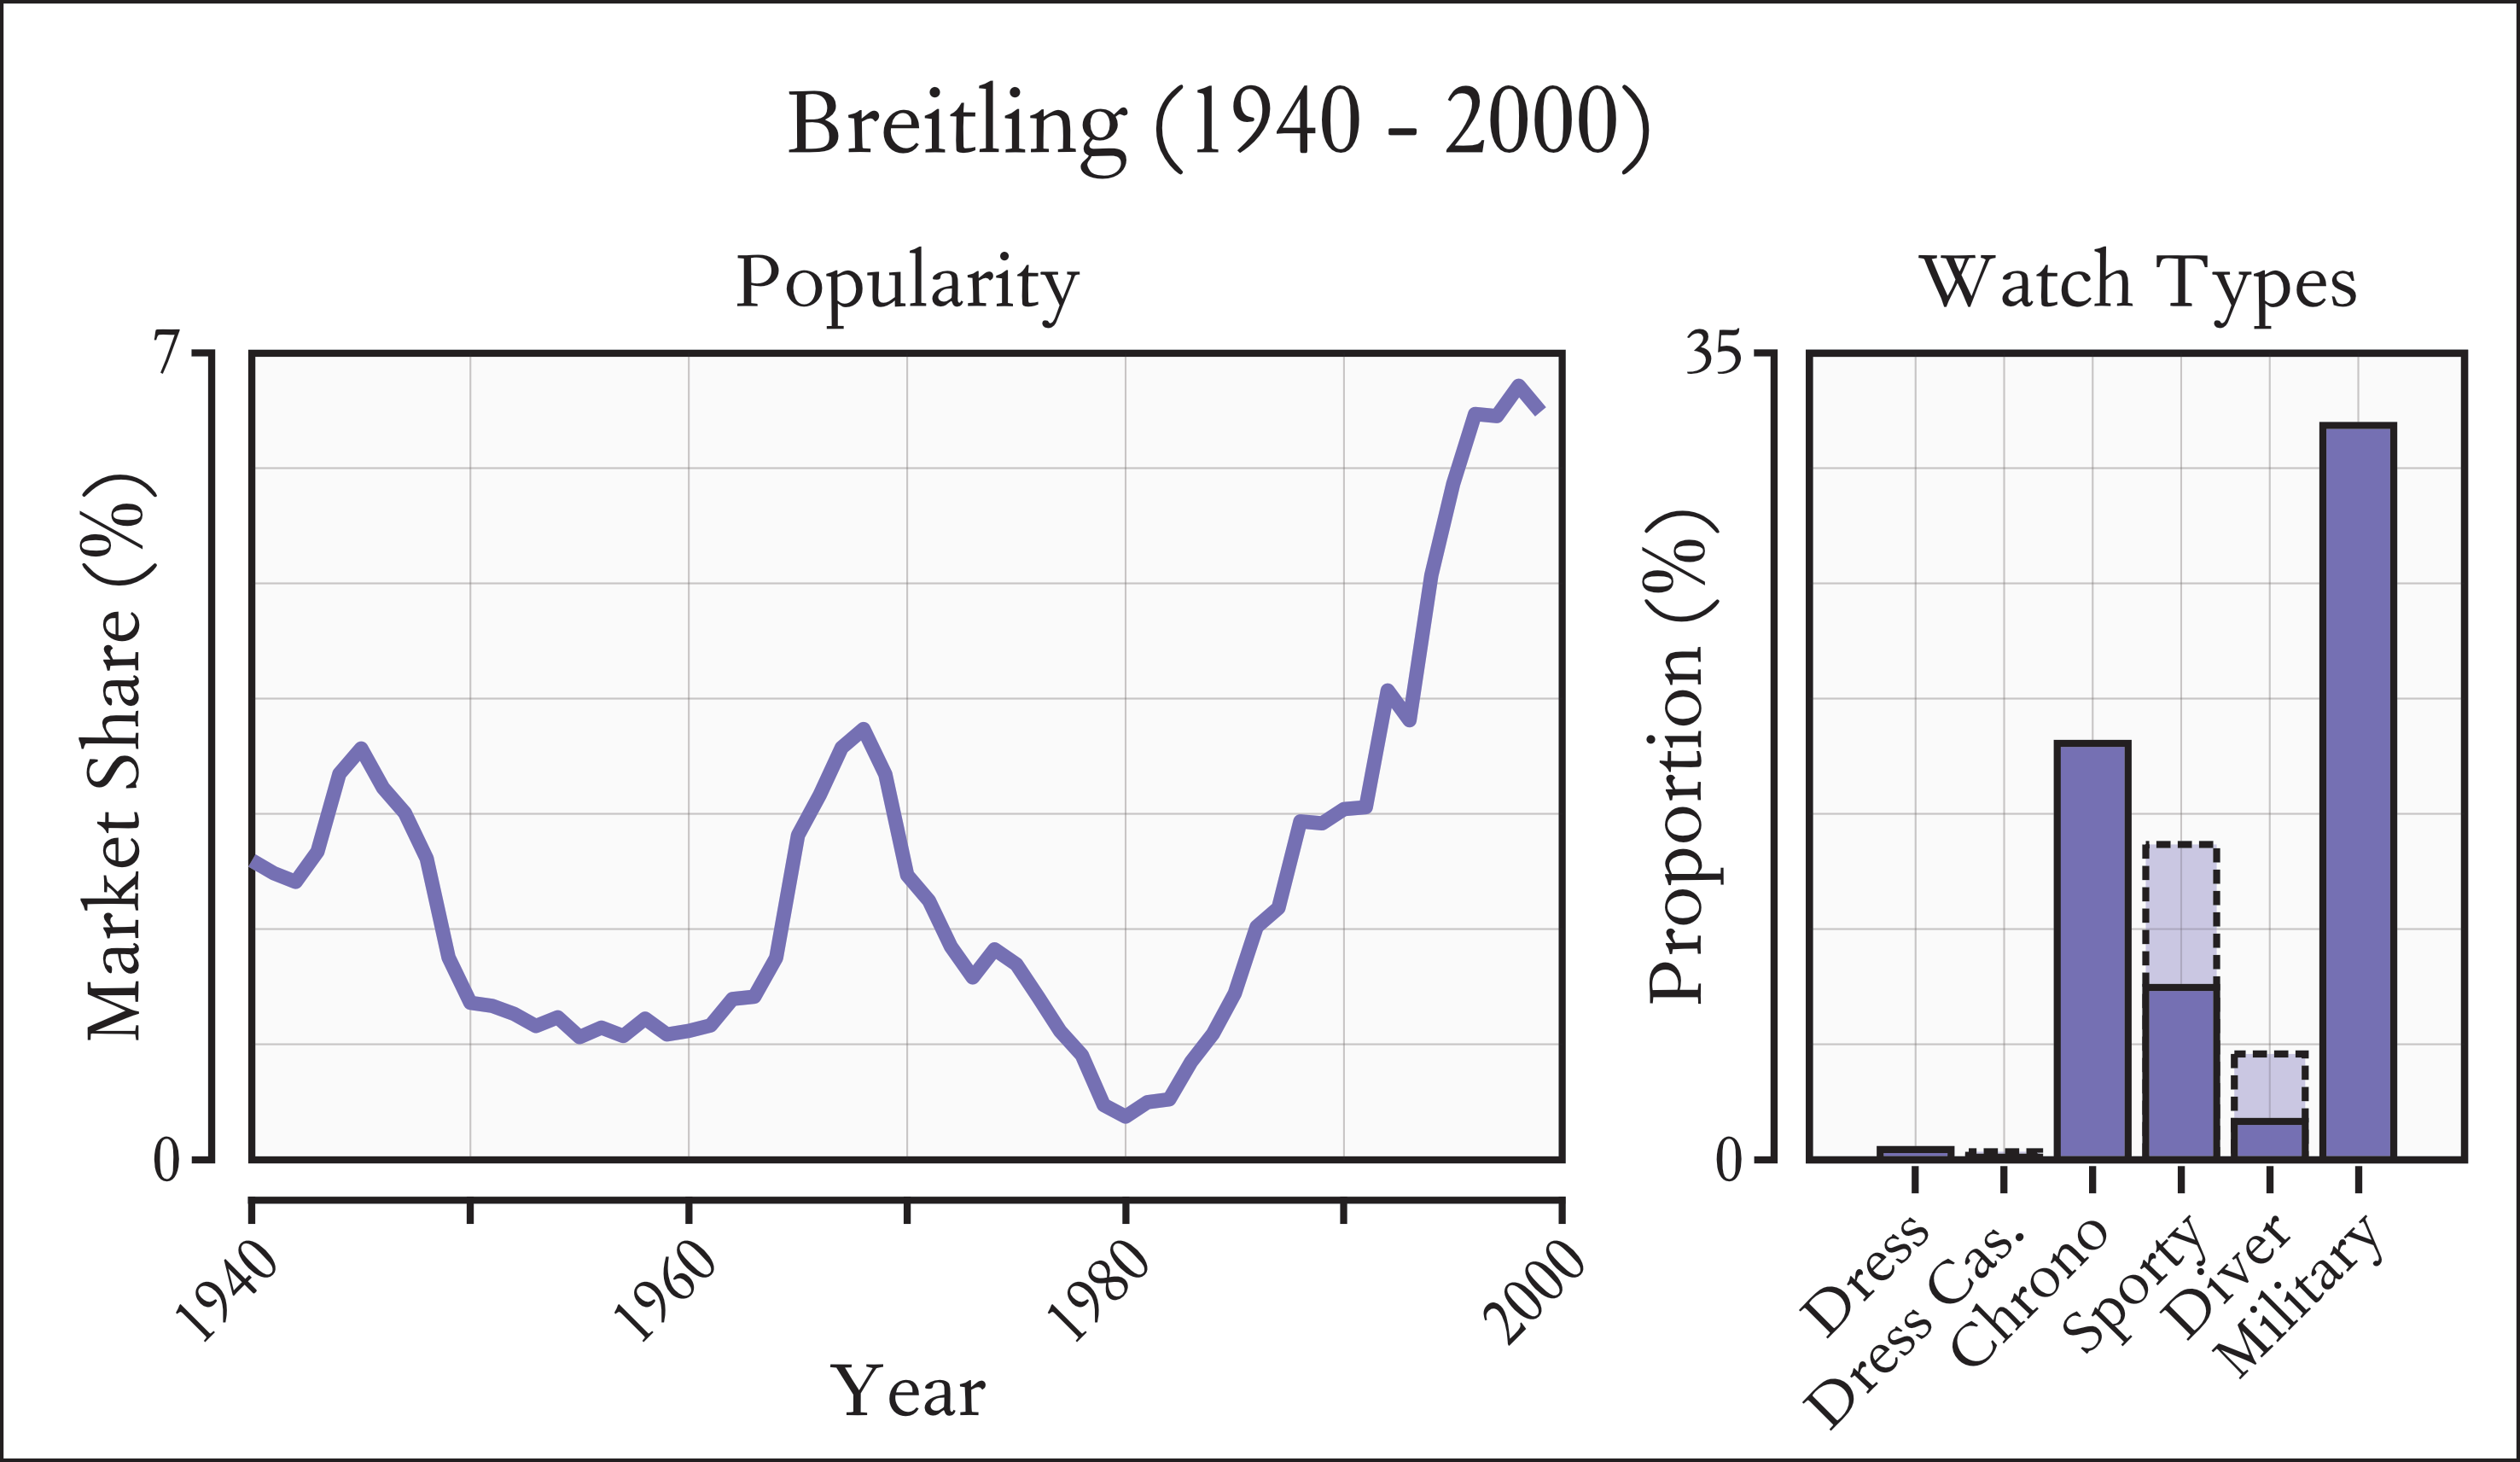 Distribution of Breitling popularity between 1940-2000